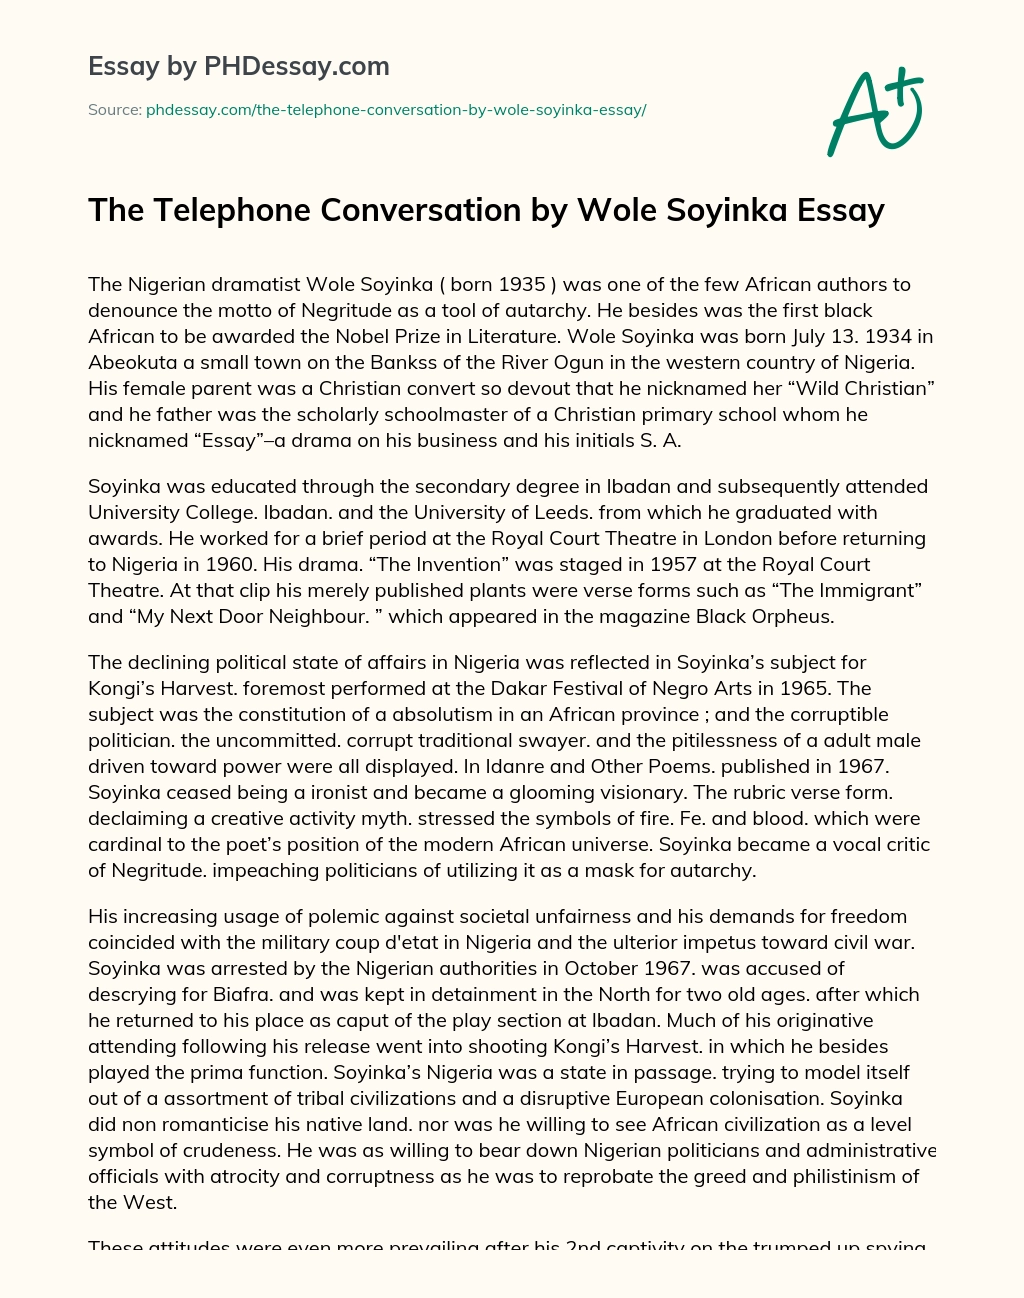 The Telephone Conversation by Wole Soyinka Essay essay